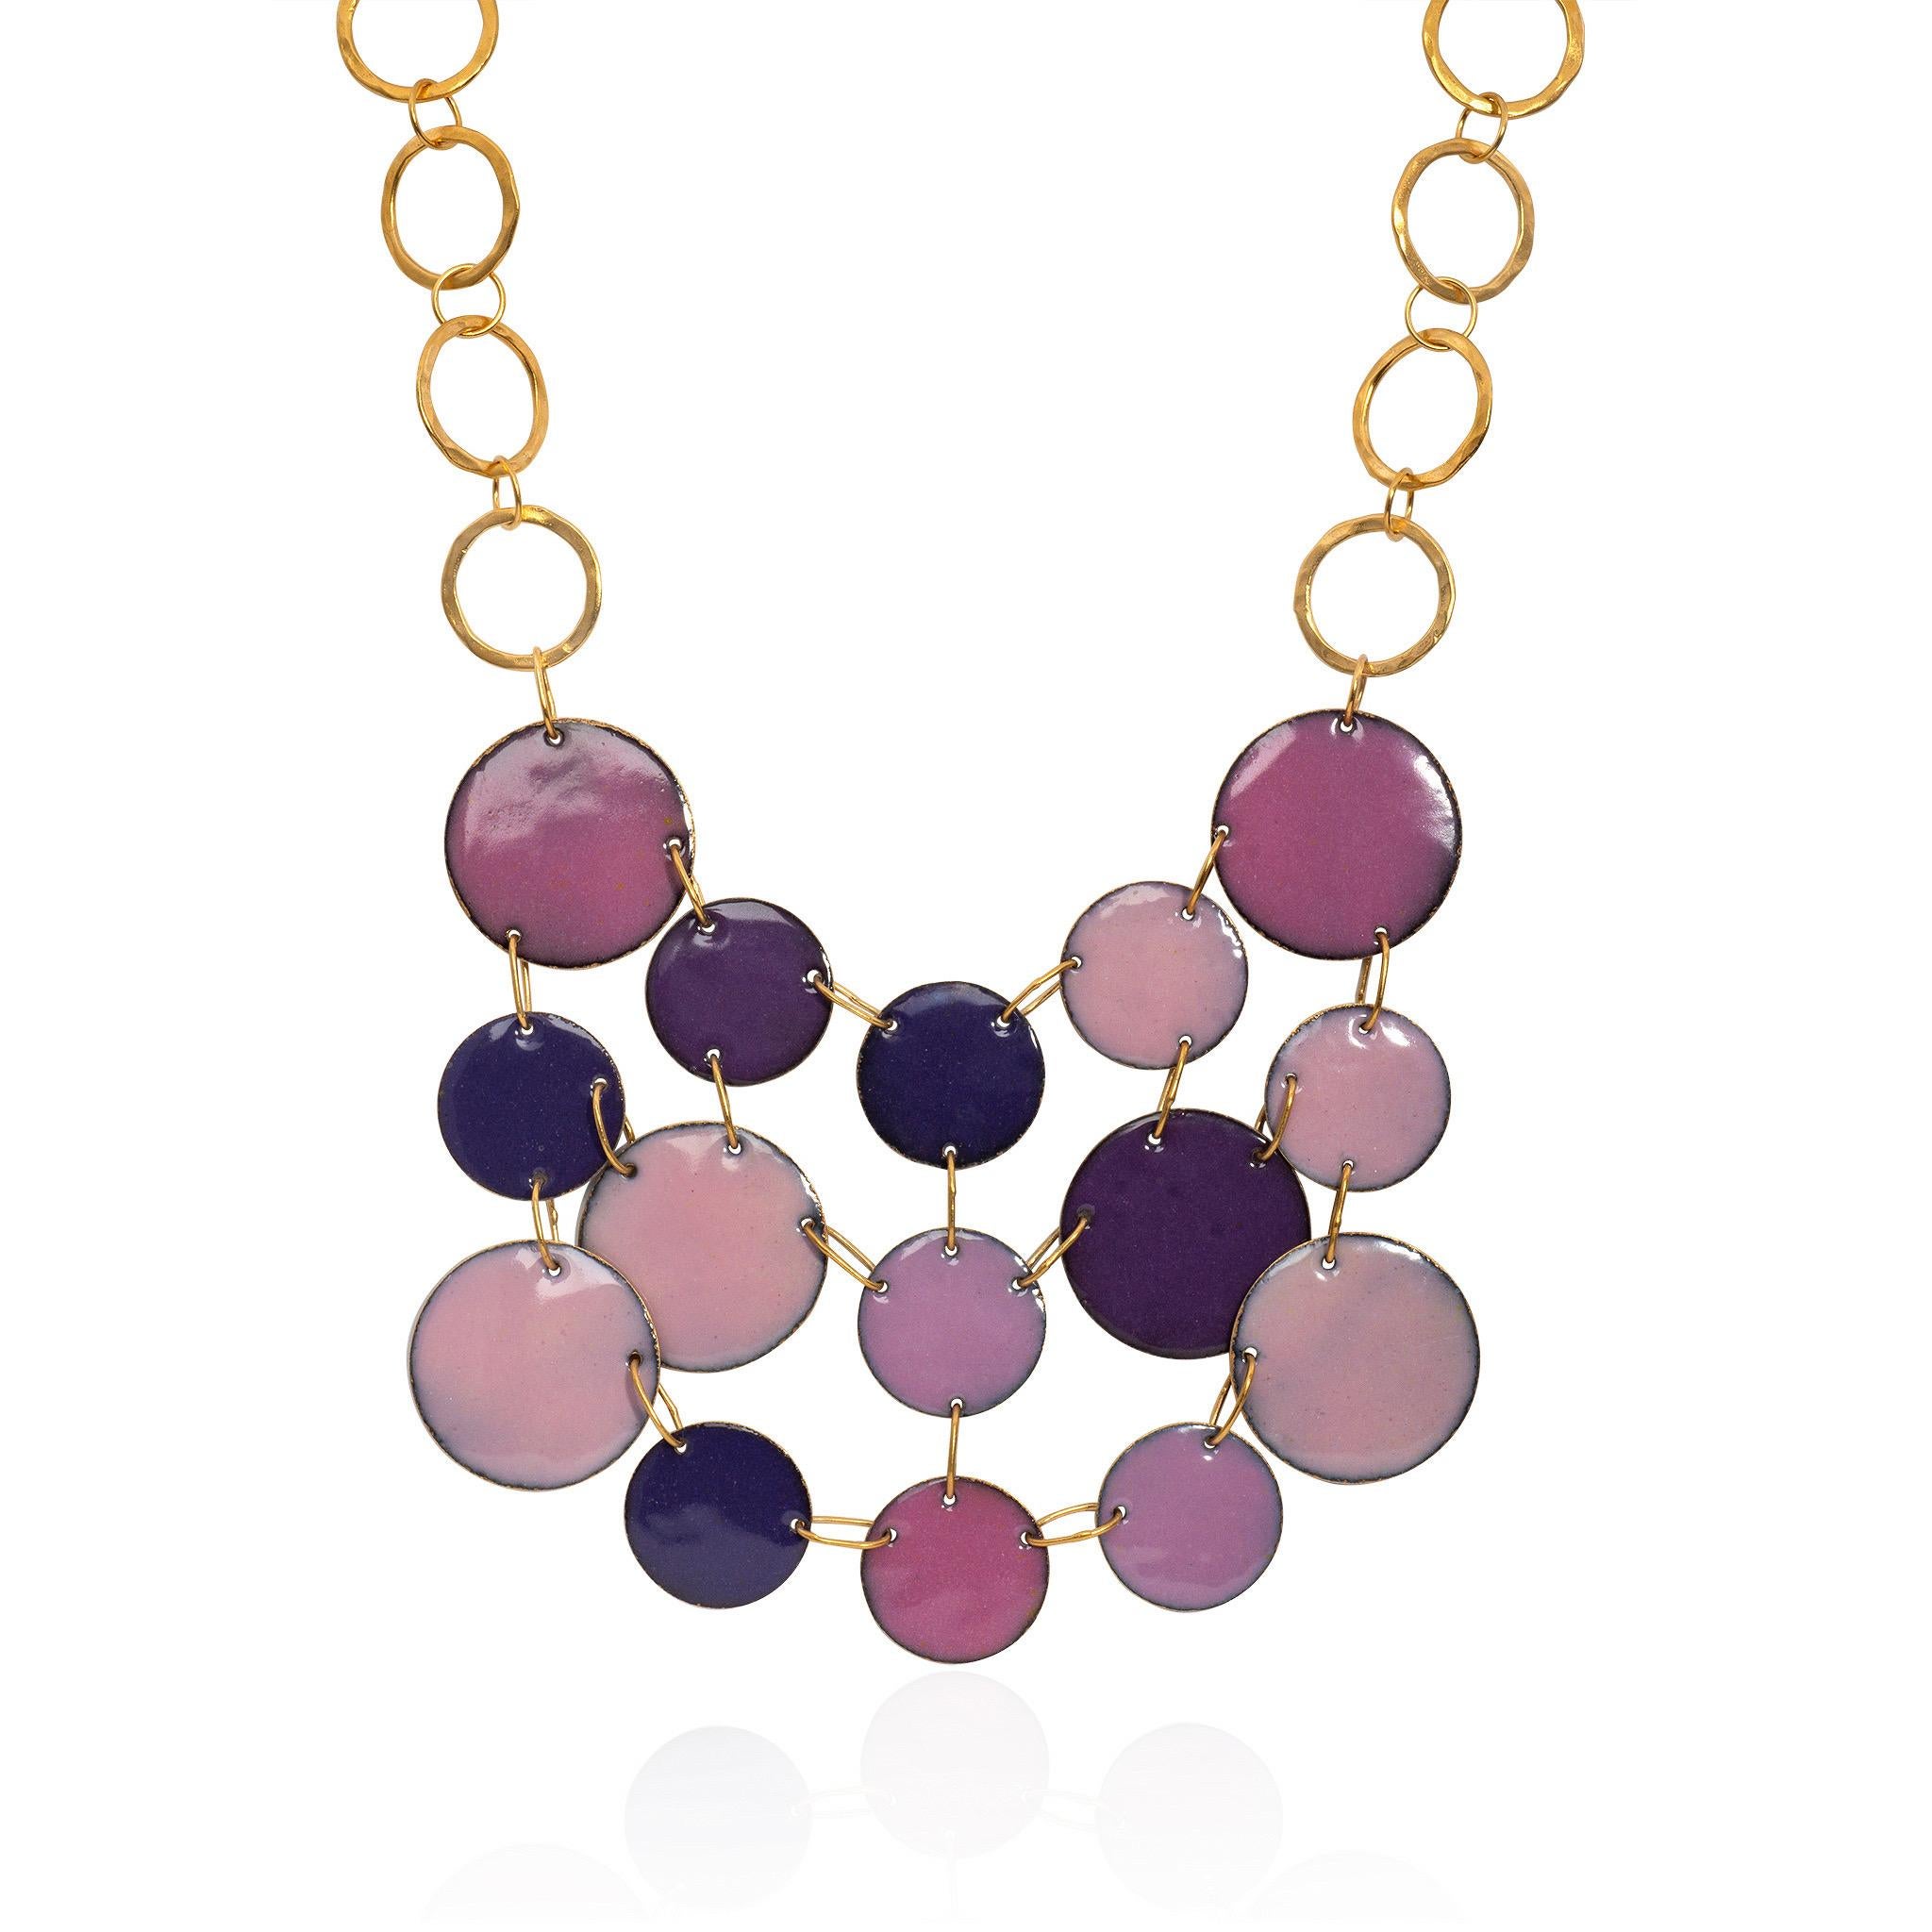 purple bib necklace